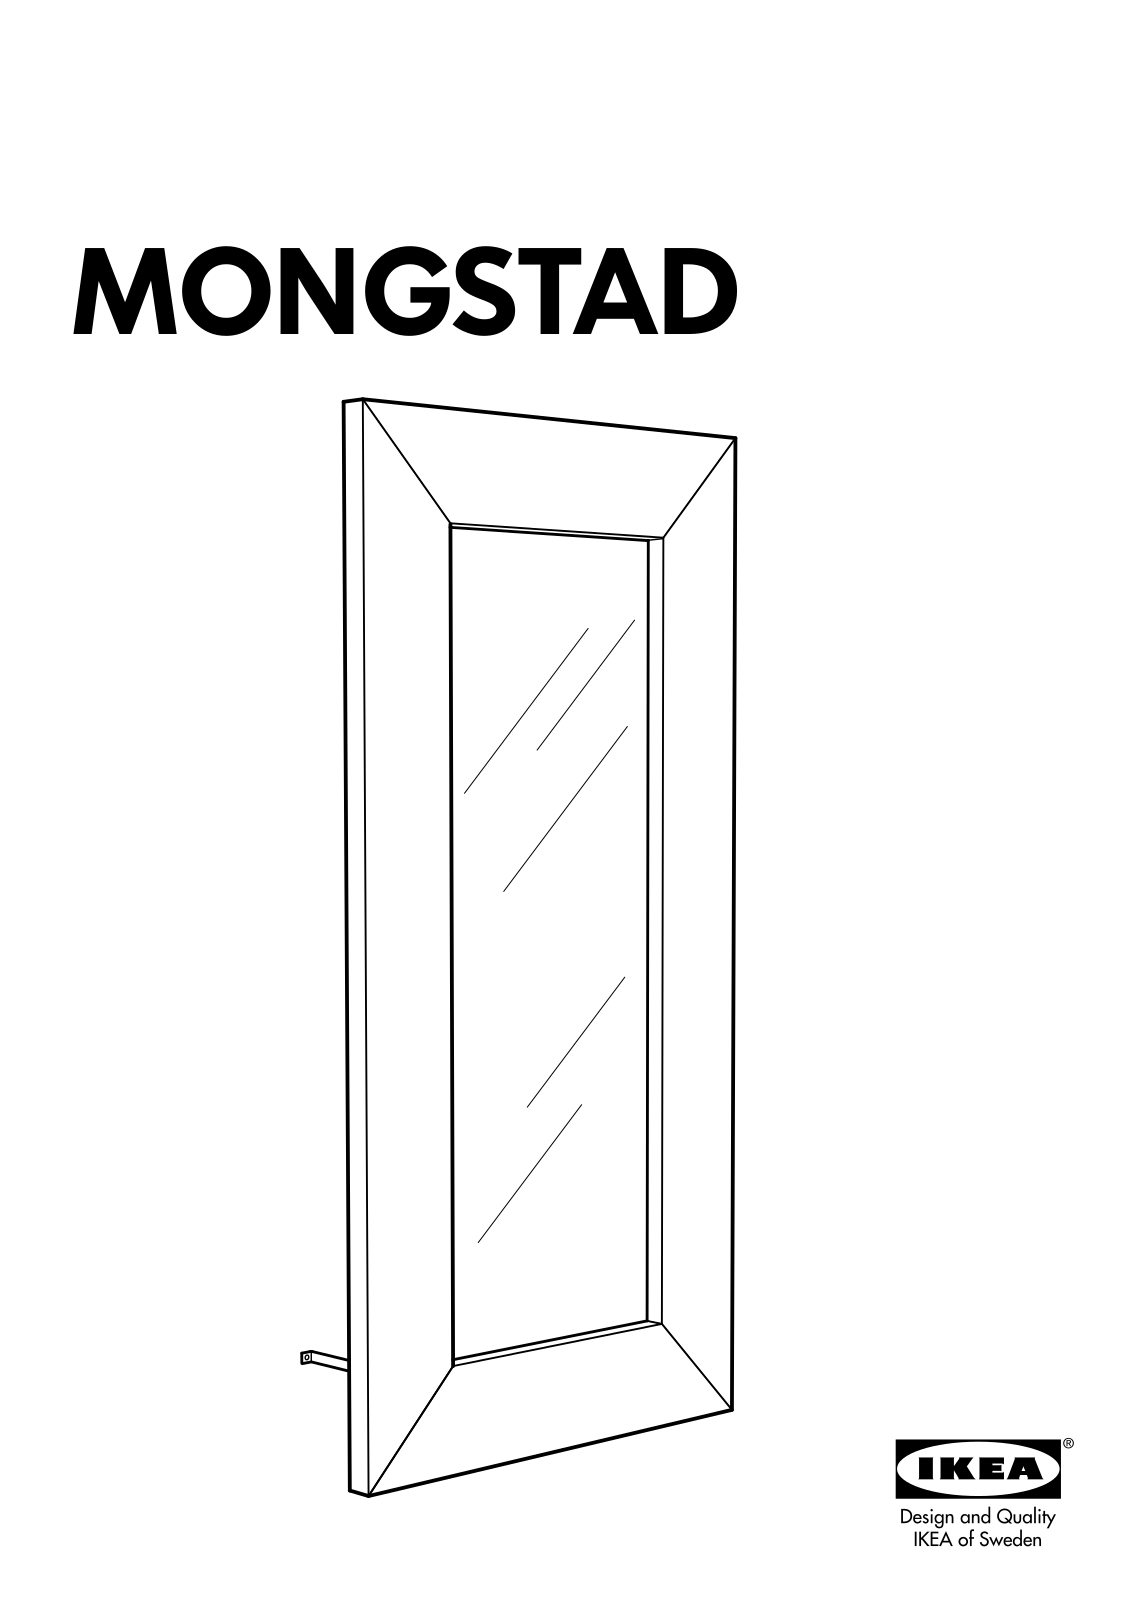 IKEA MONGSTAD User Manual